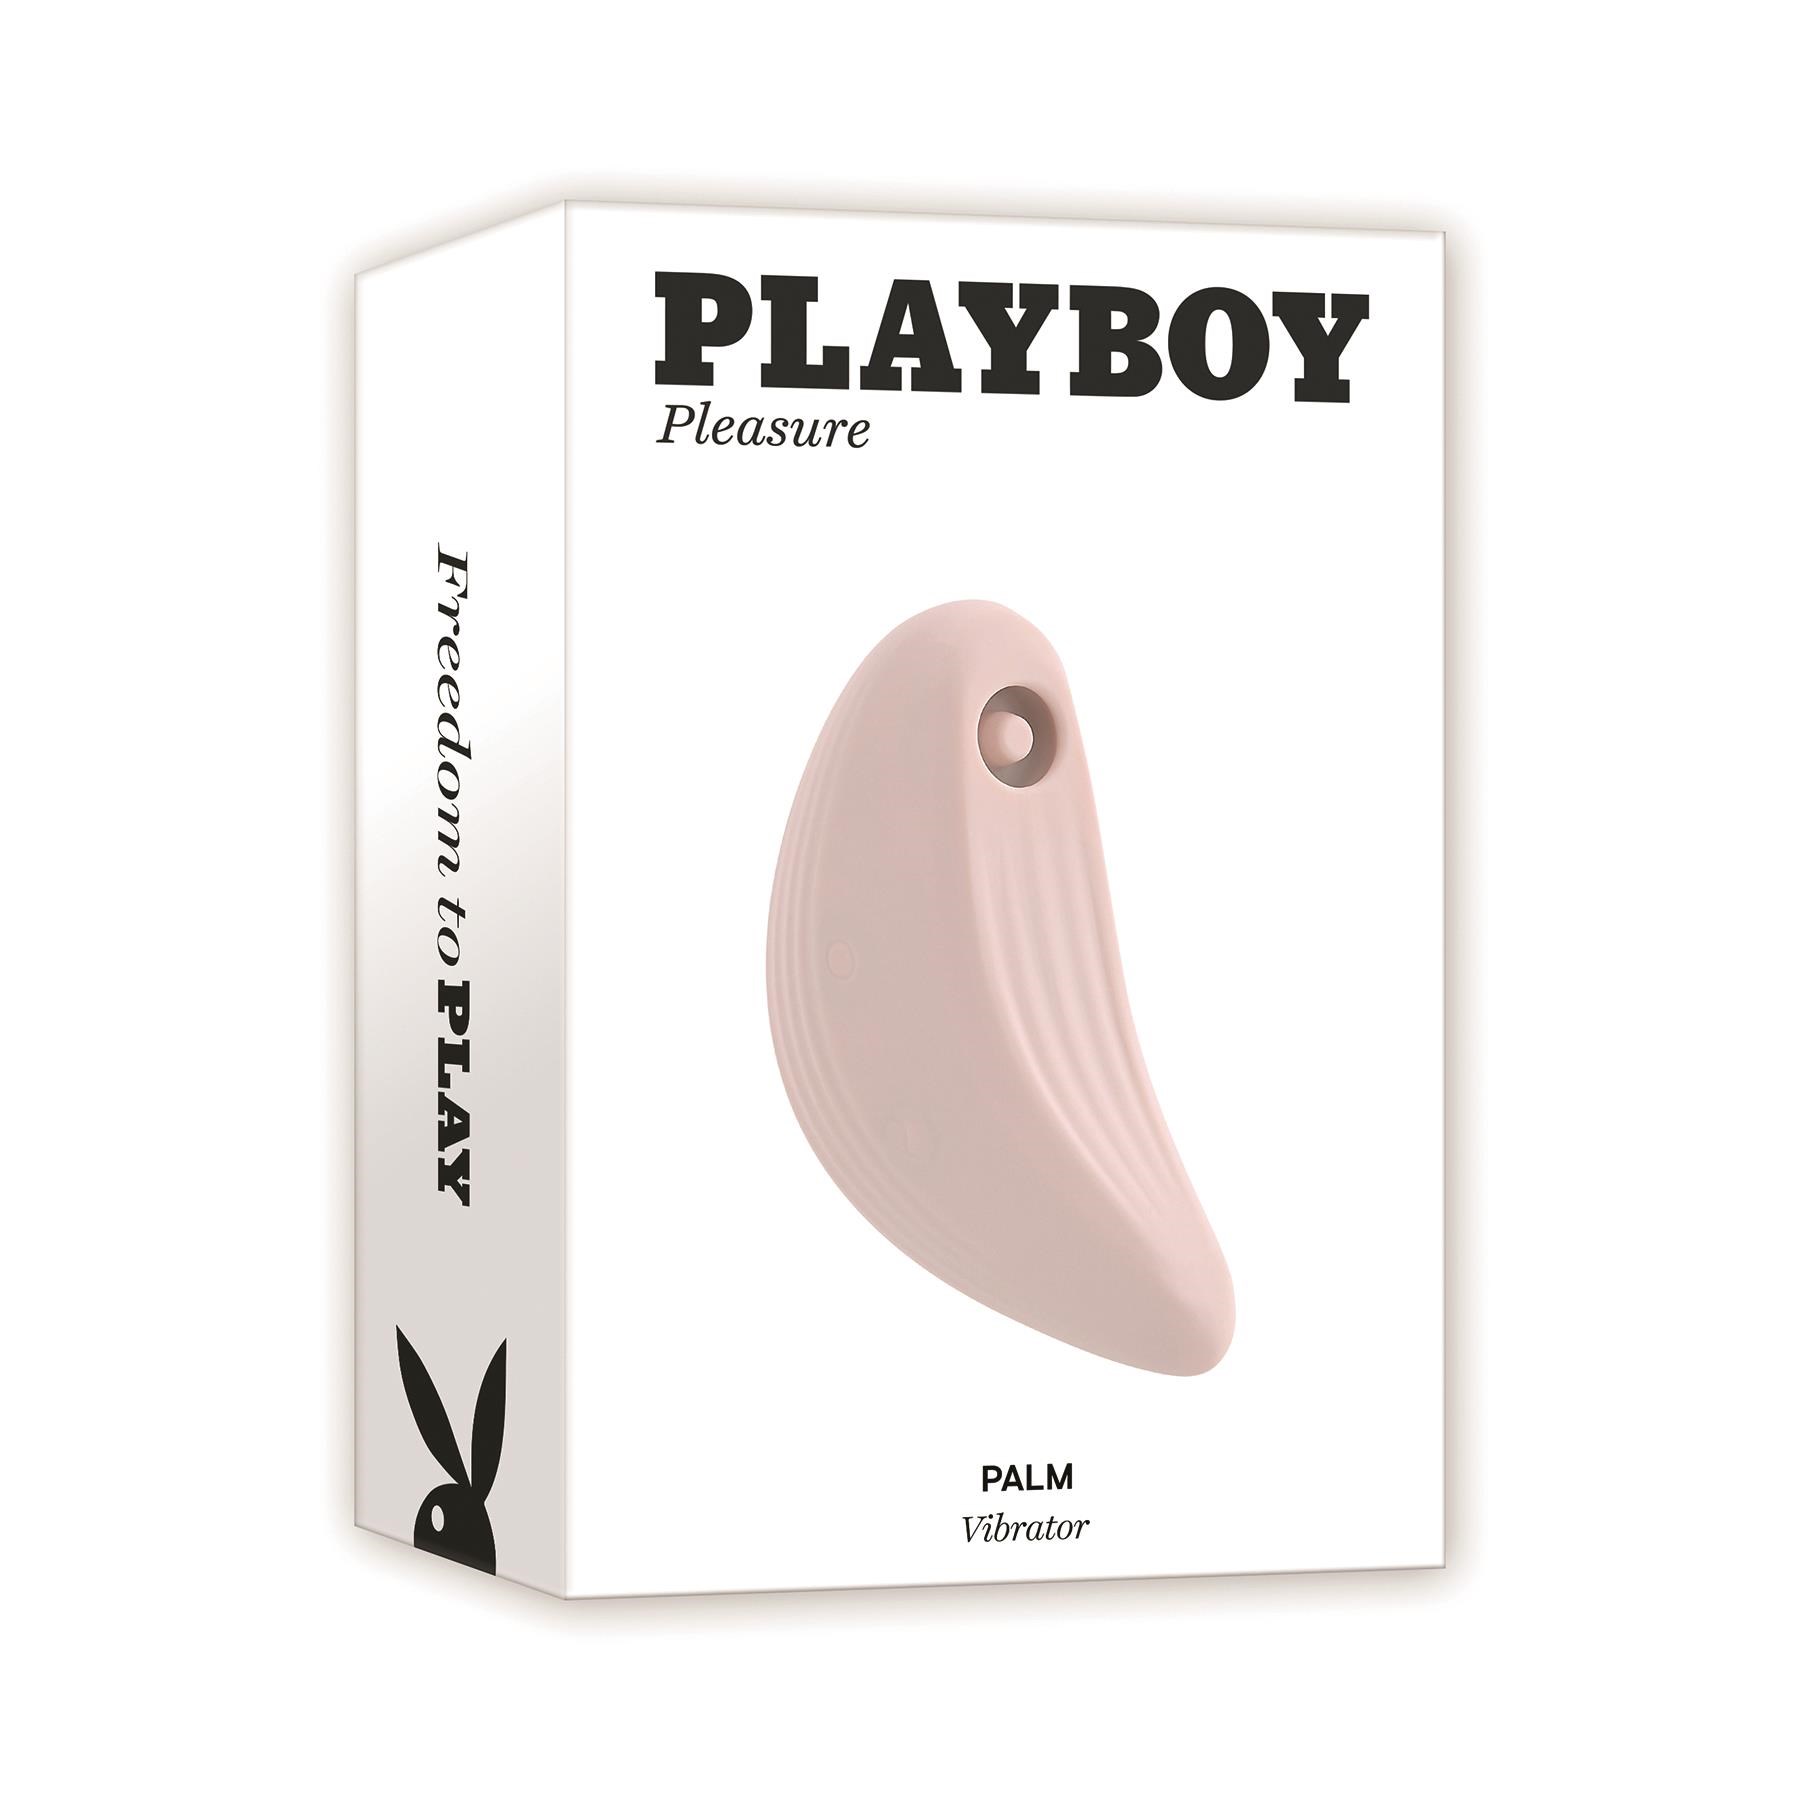 Playboy Pleasure Palm Clitoral Stimulator - Packaging